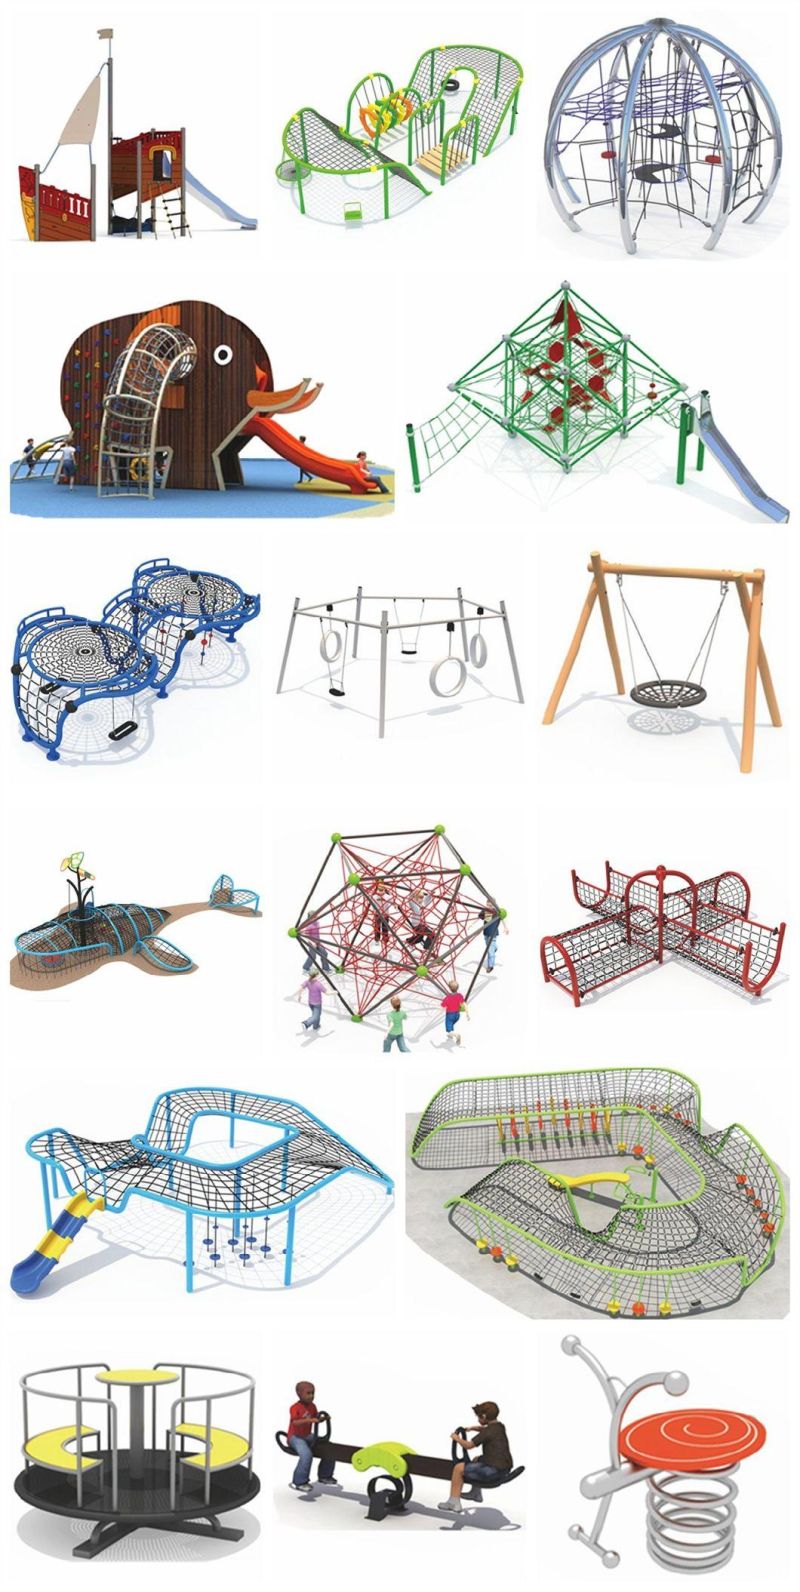 Scenic Outdoor Playground Park Kids Stainless Steel Slide Climbing Equipment